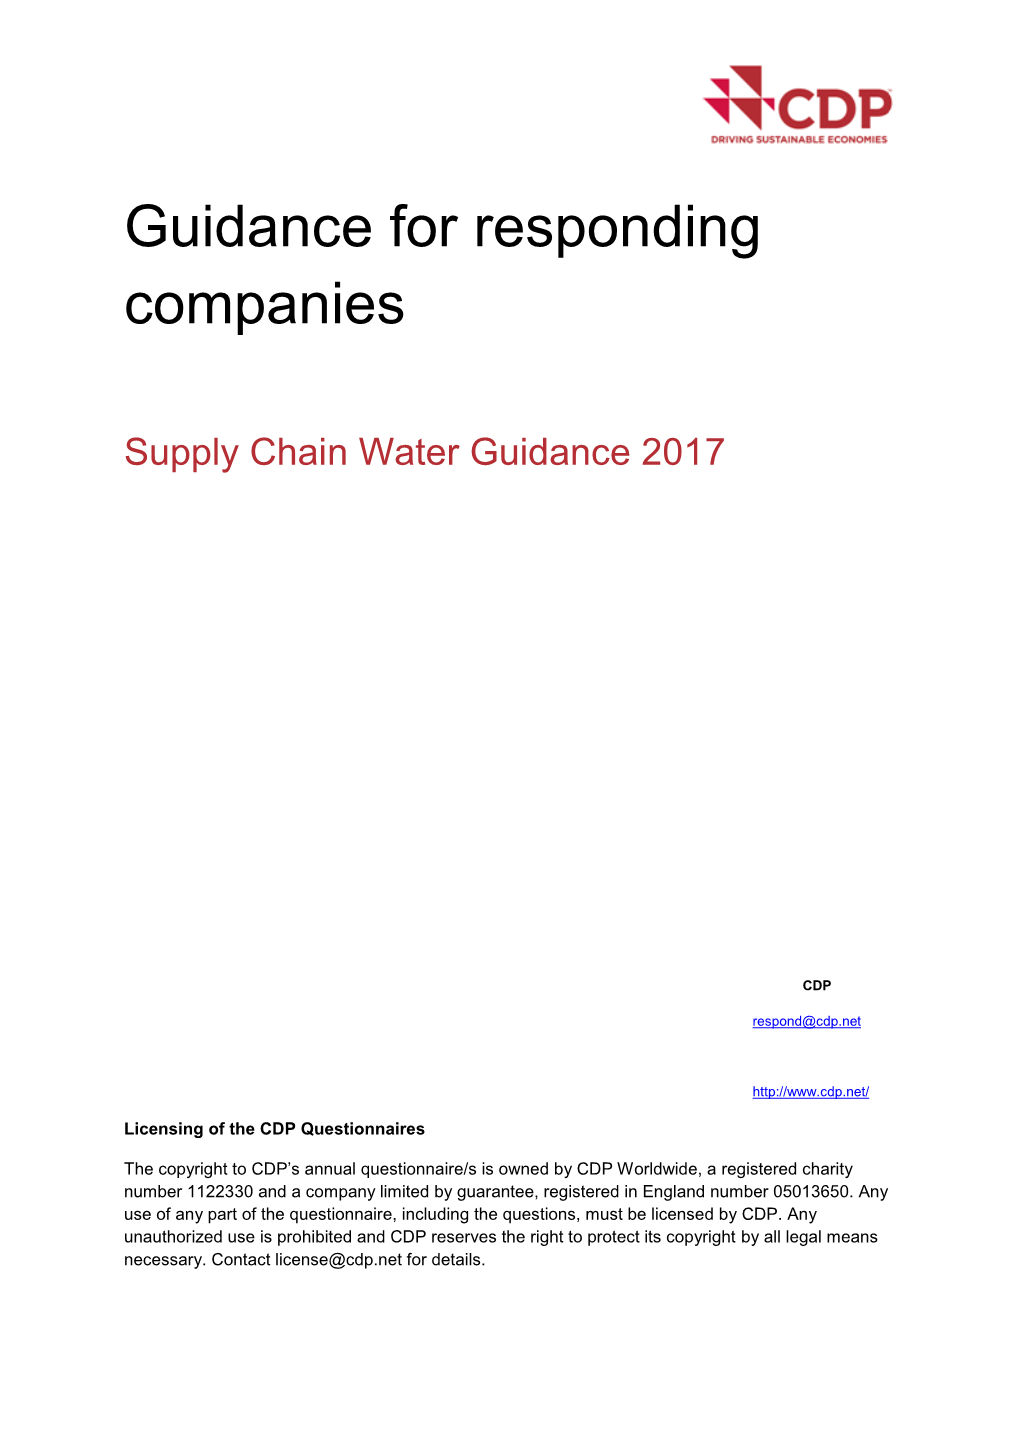 Guidance for Responding Companies